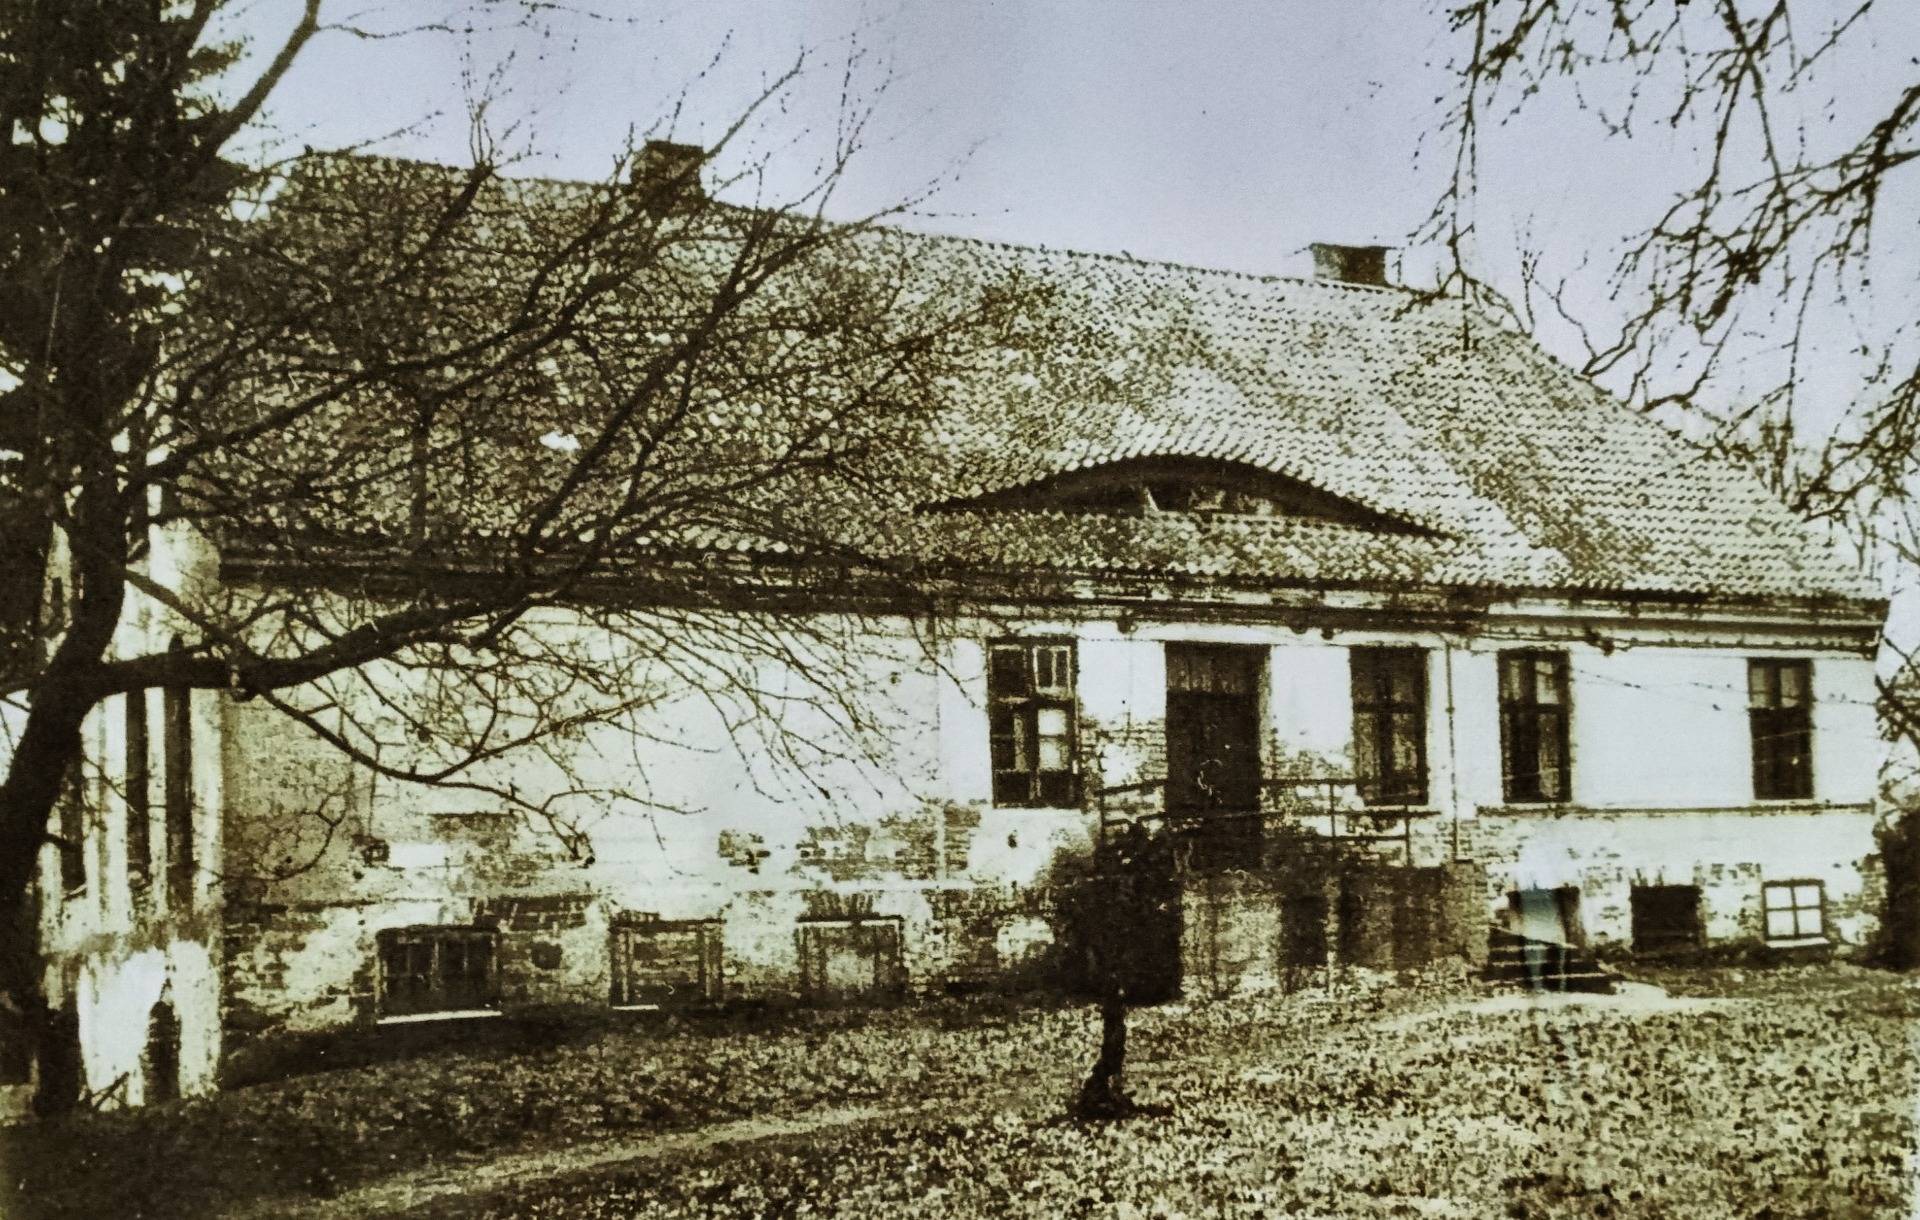 Heinrichshöfen in former times, a ruin after the socialist era